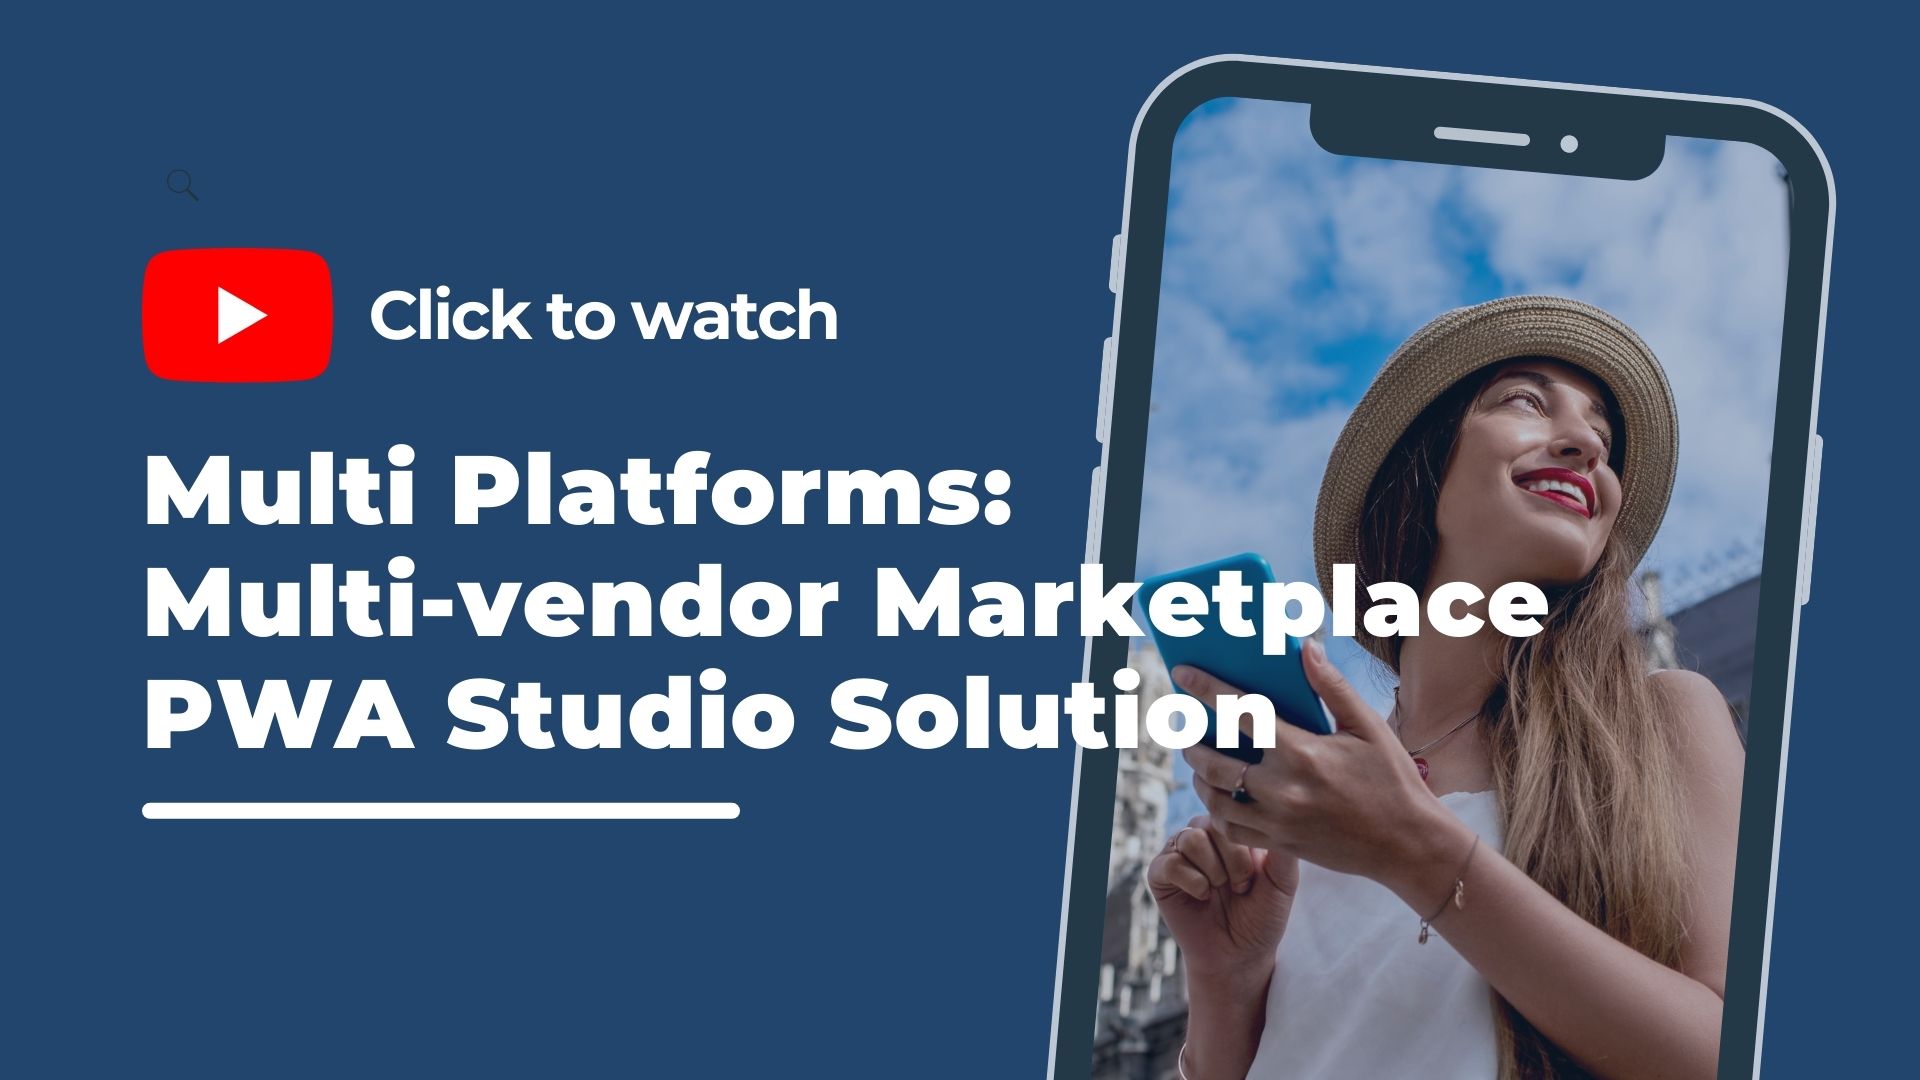 Magento 2 multivendor marketplace PWA studio - Multi-platform